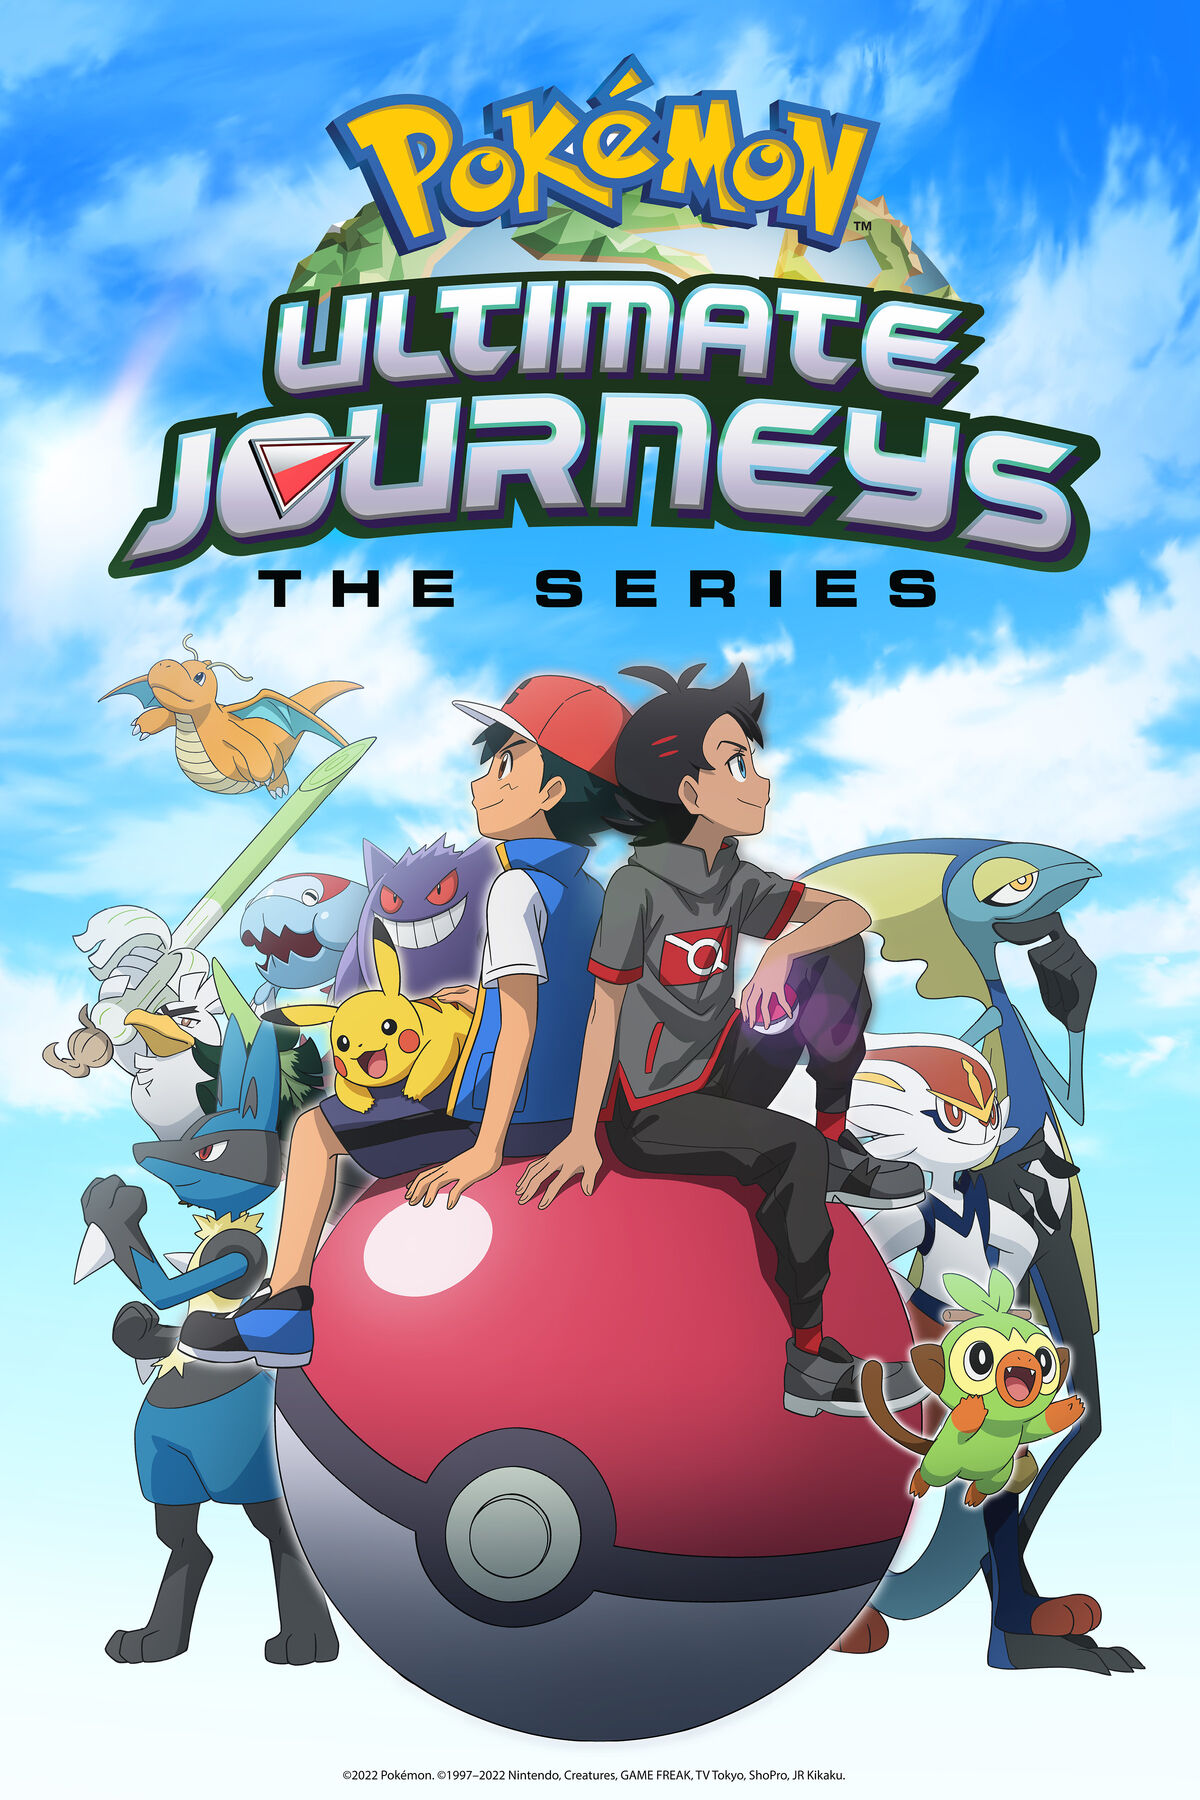 Pokémon Ultimate Journeys: The Series | Pokémon Wiki | Fandom